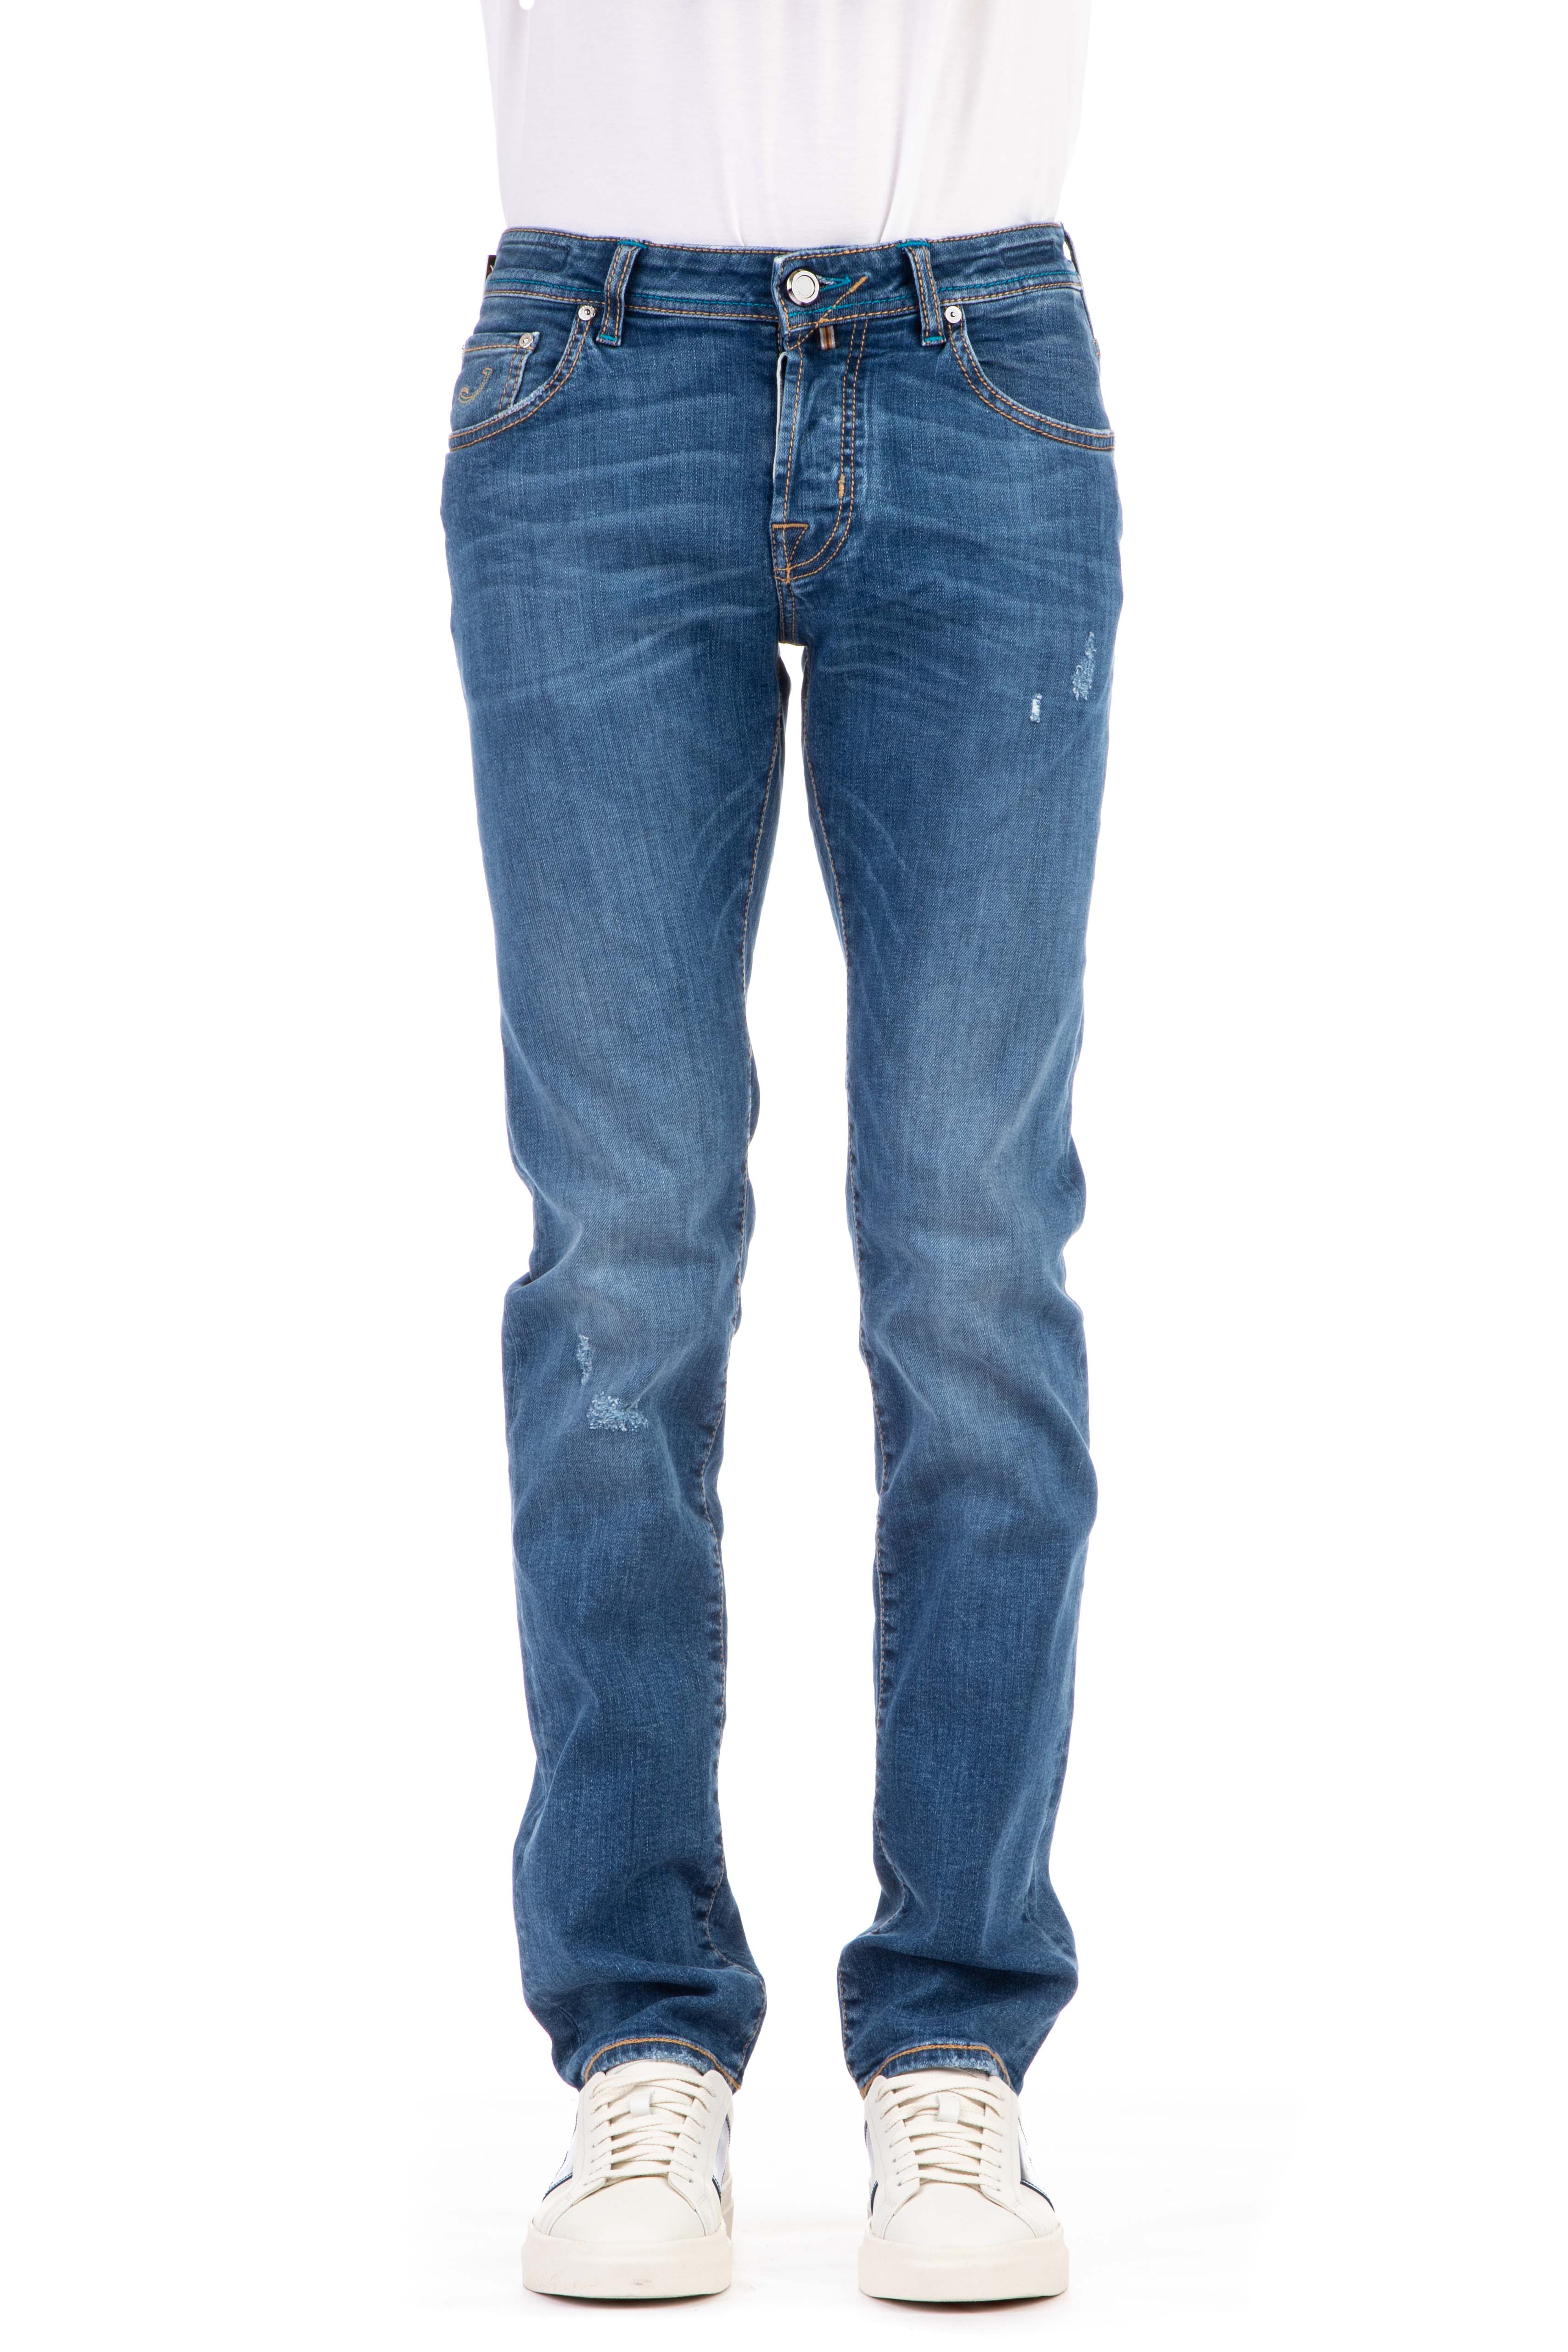 Jeans limited edition etichettaazzurranick fit